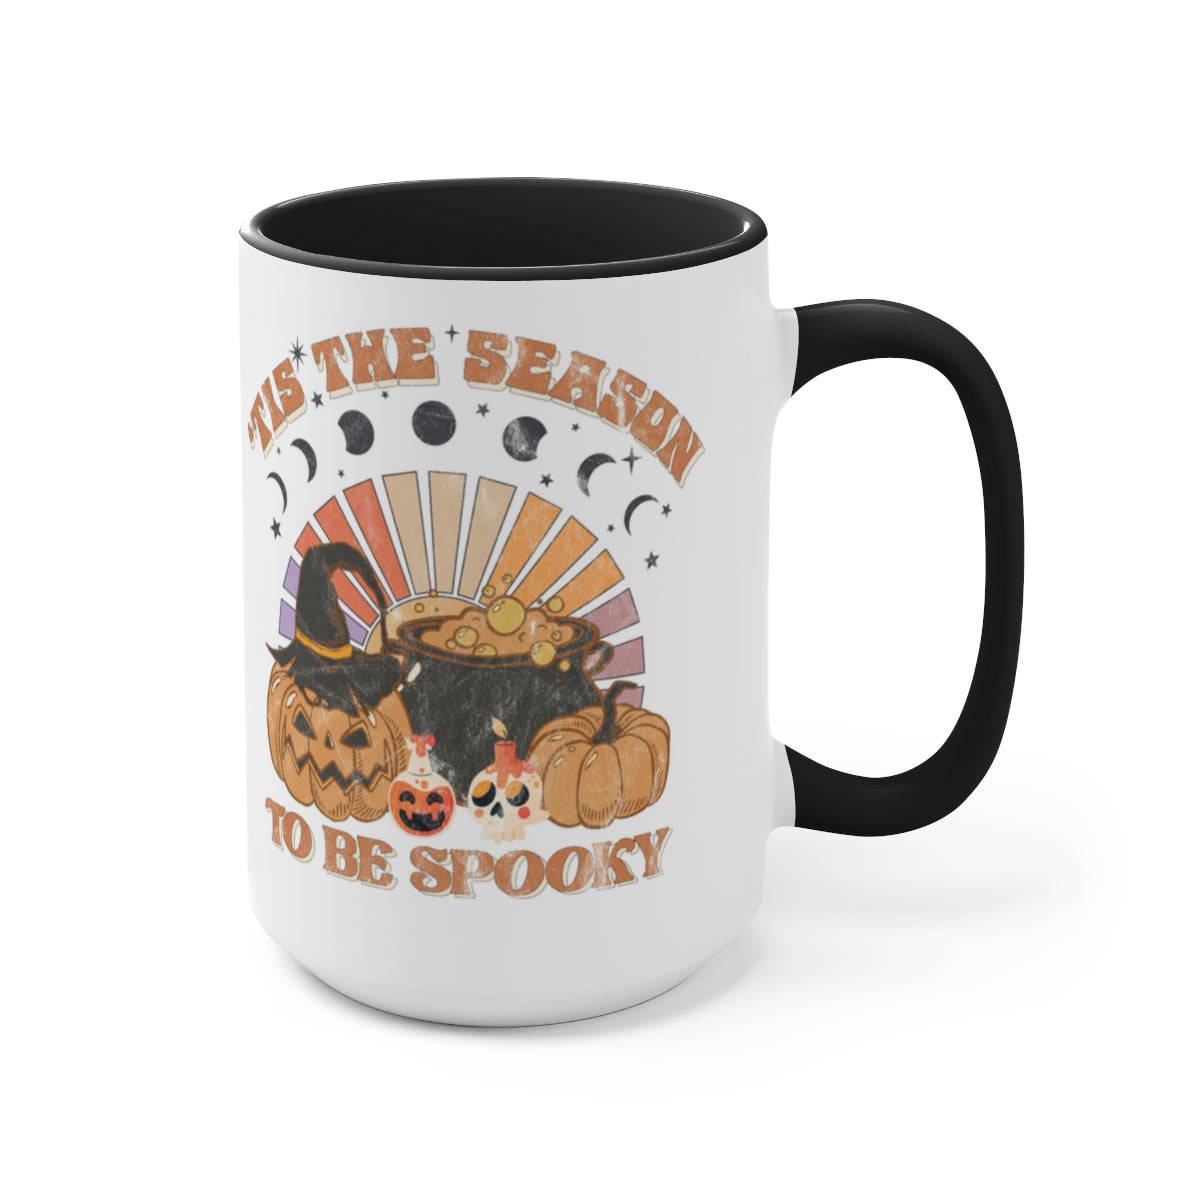 Tis the season to be spooky pumpkin coffee mug- 15oz